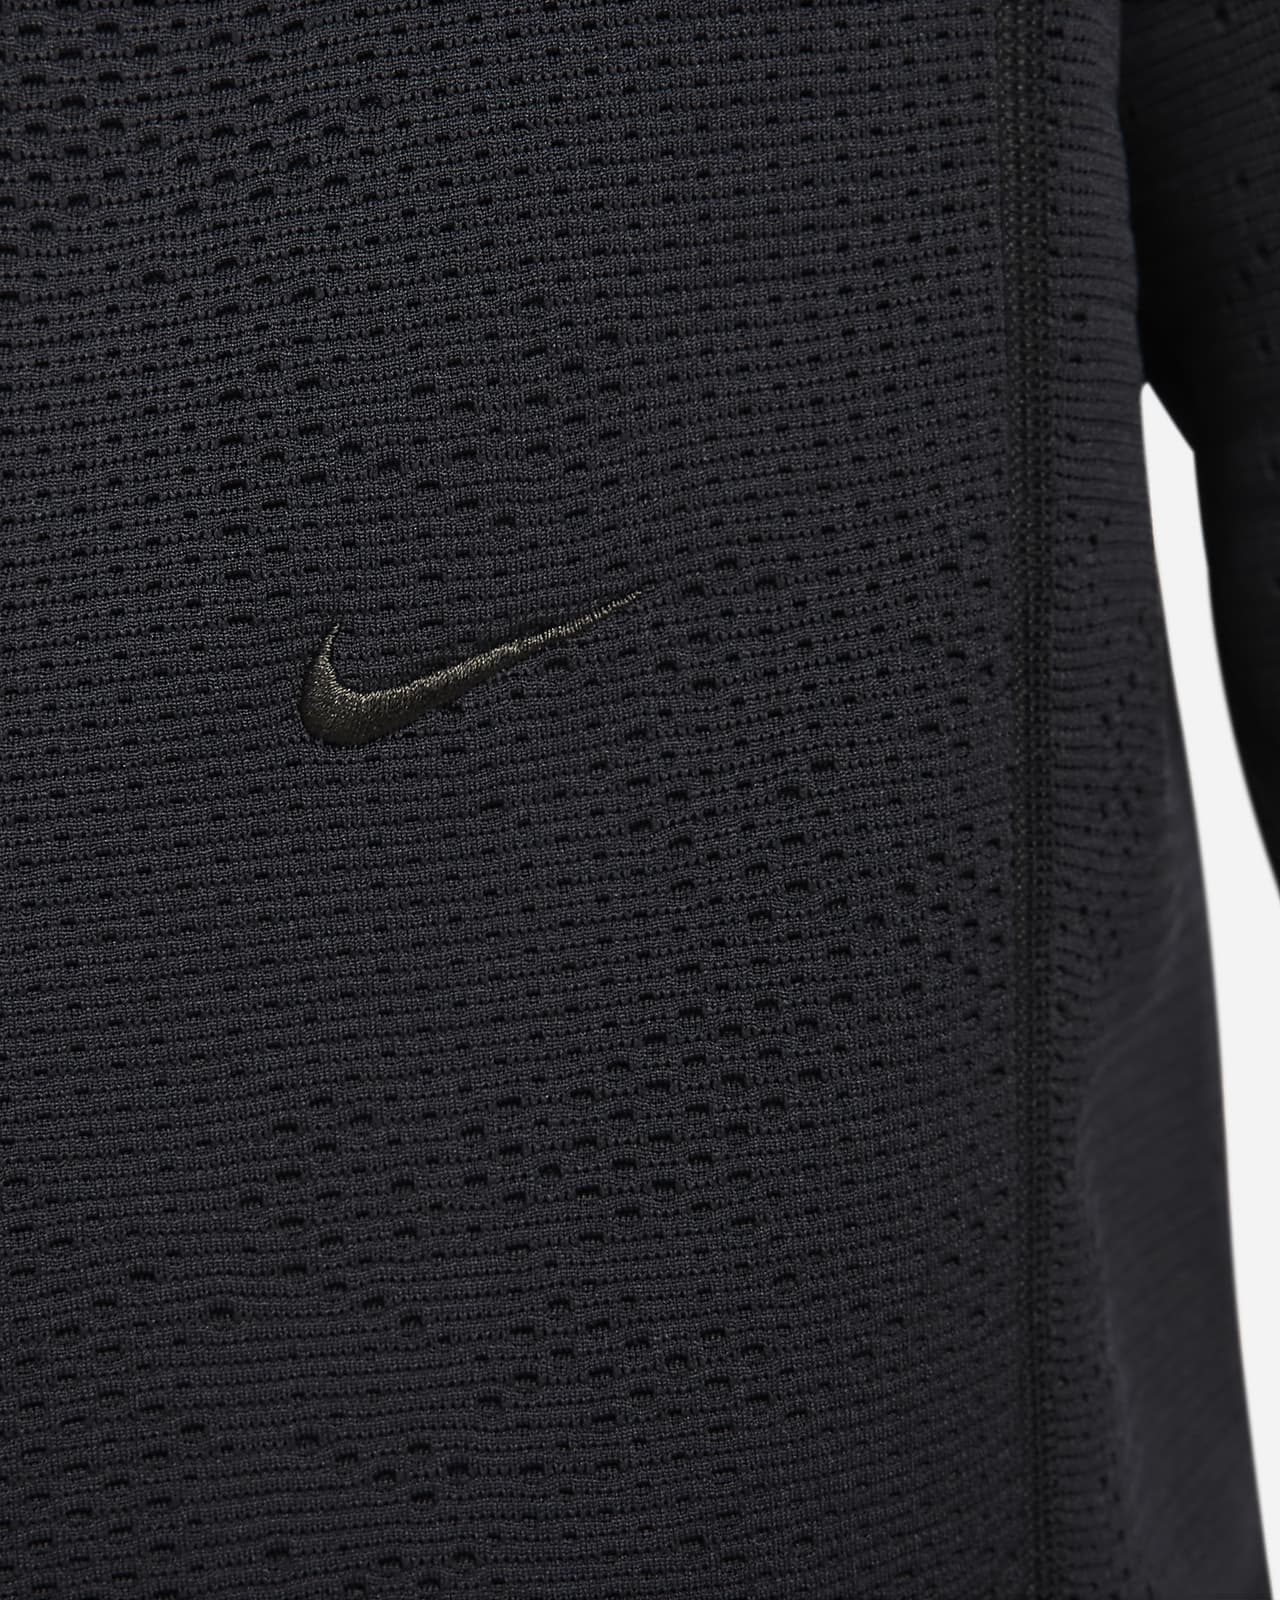 Nike Dri-FIT ADV APS Men's Long-Sleeve Versatile Top